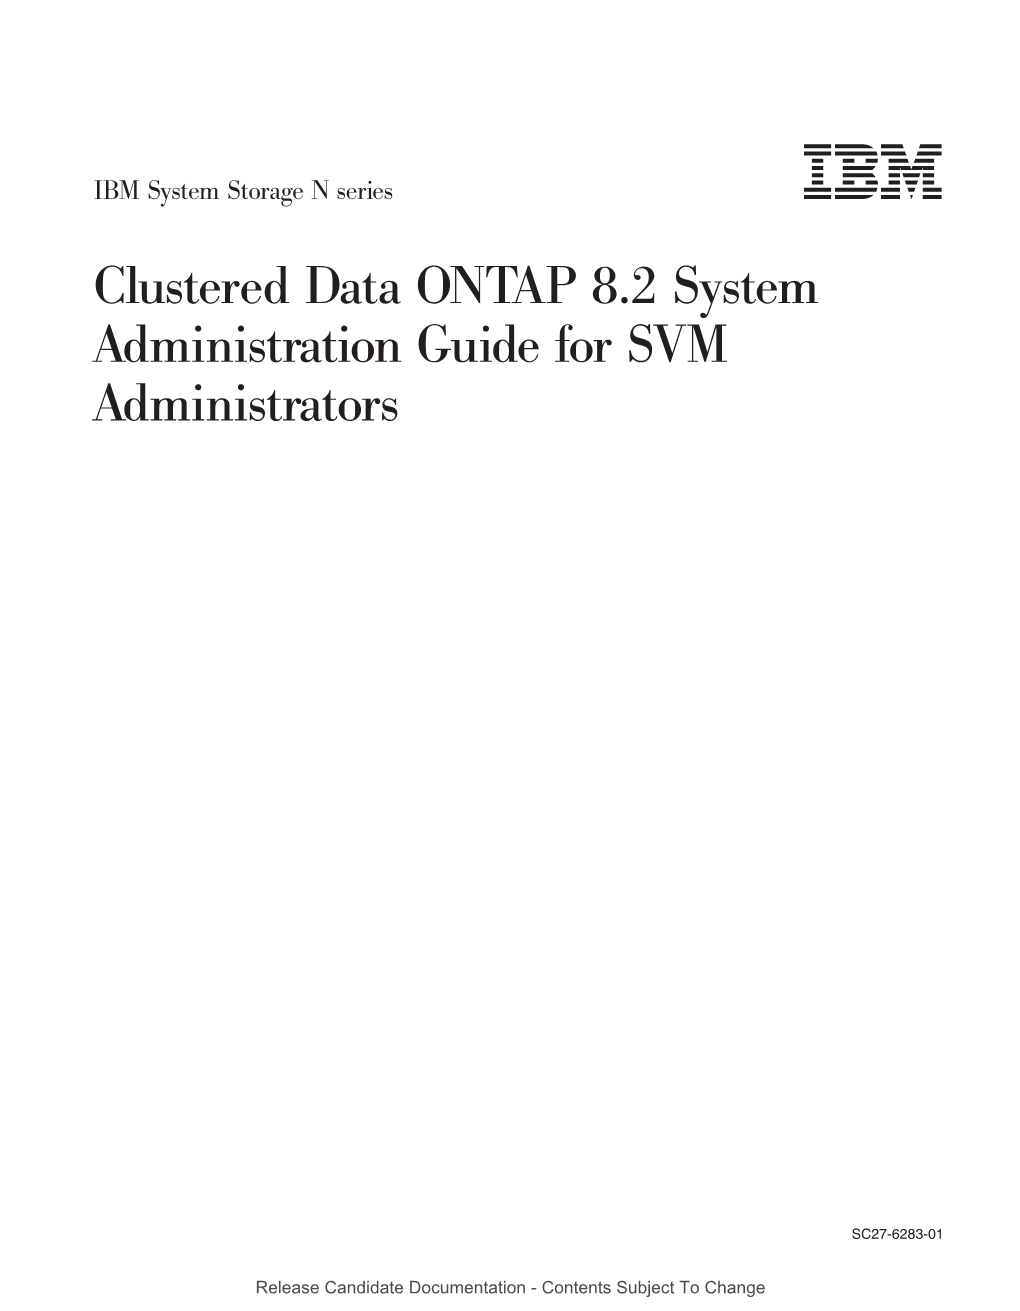 IBM System Storage N Series Clustered Data ONTAP 8.2 System